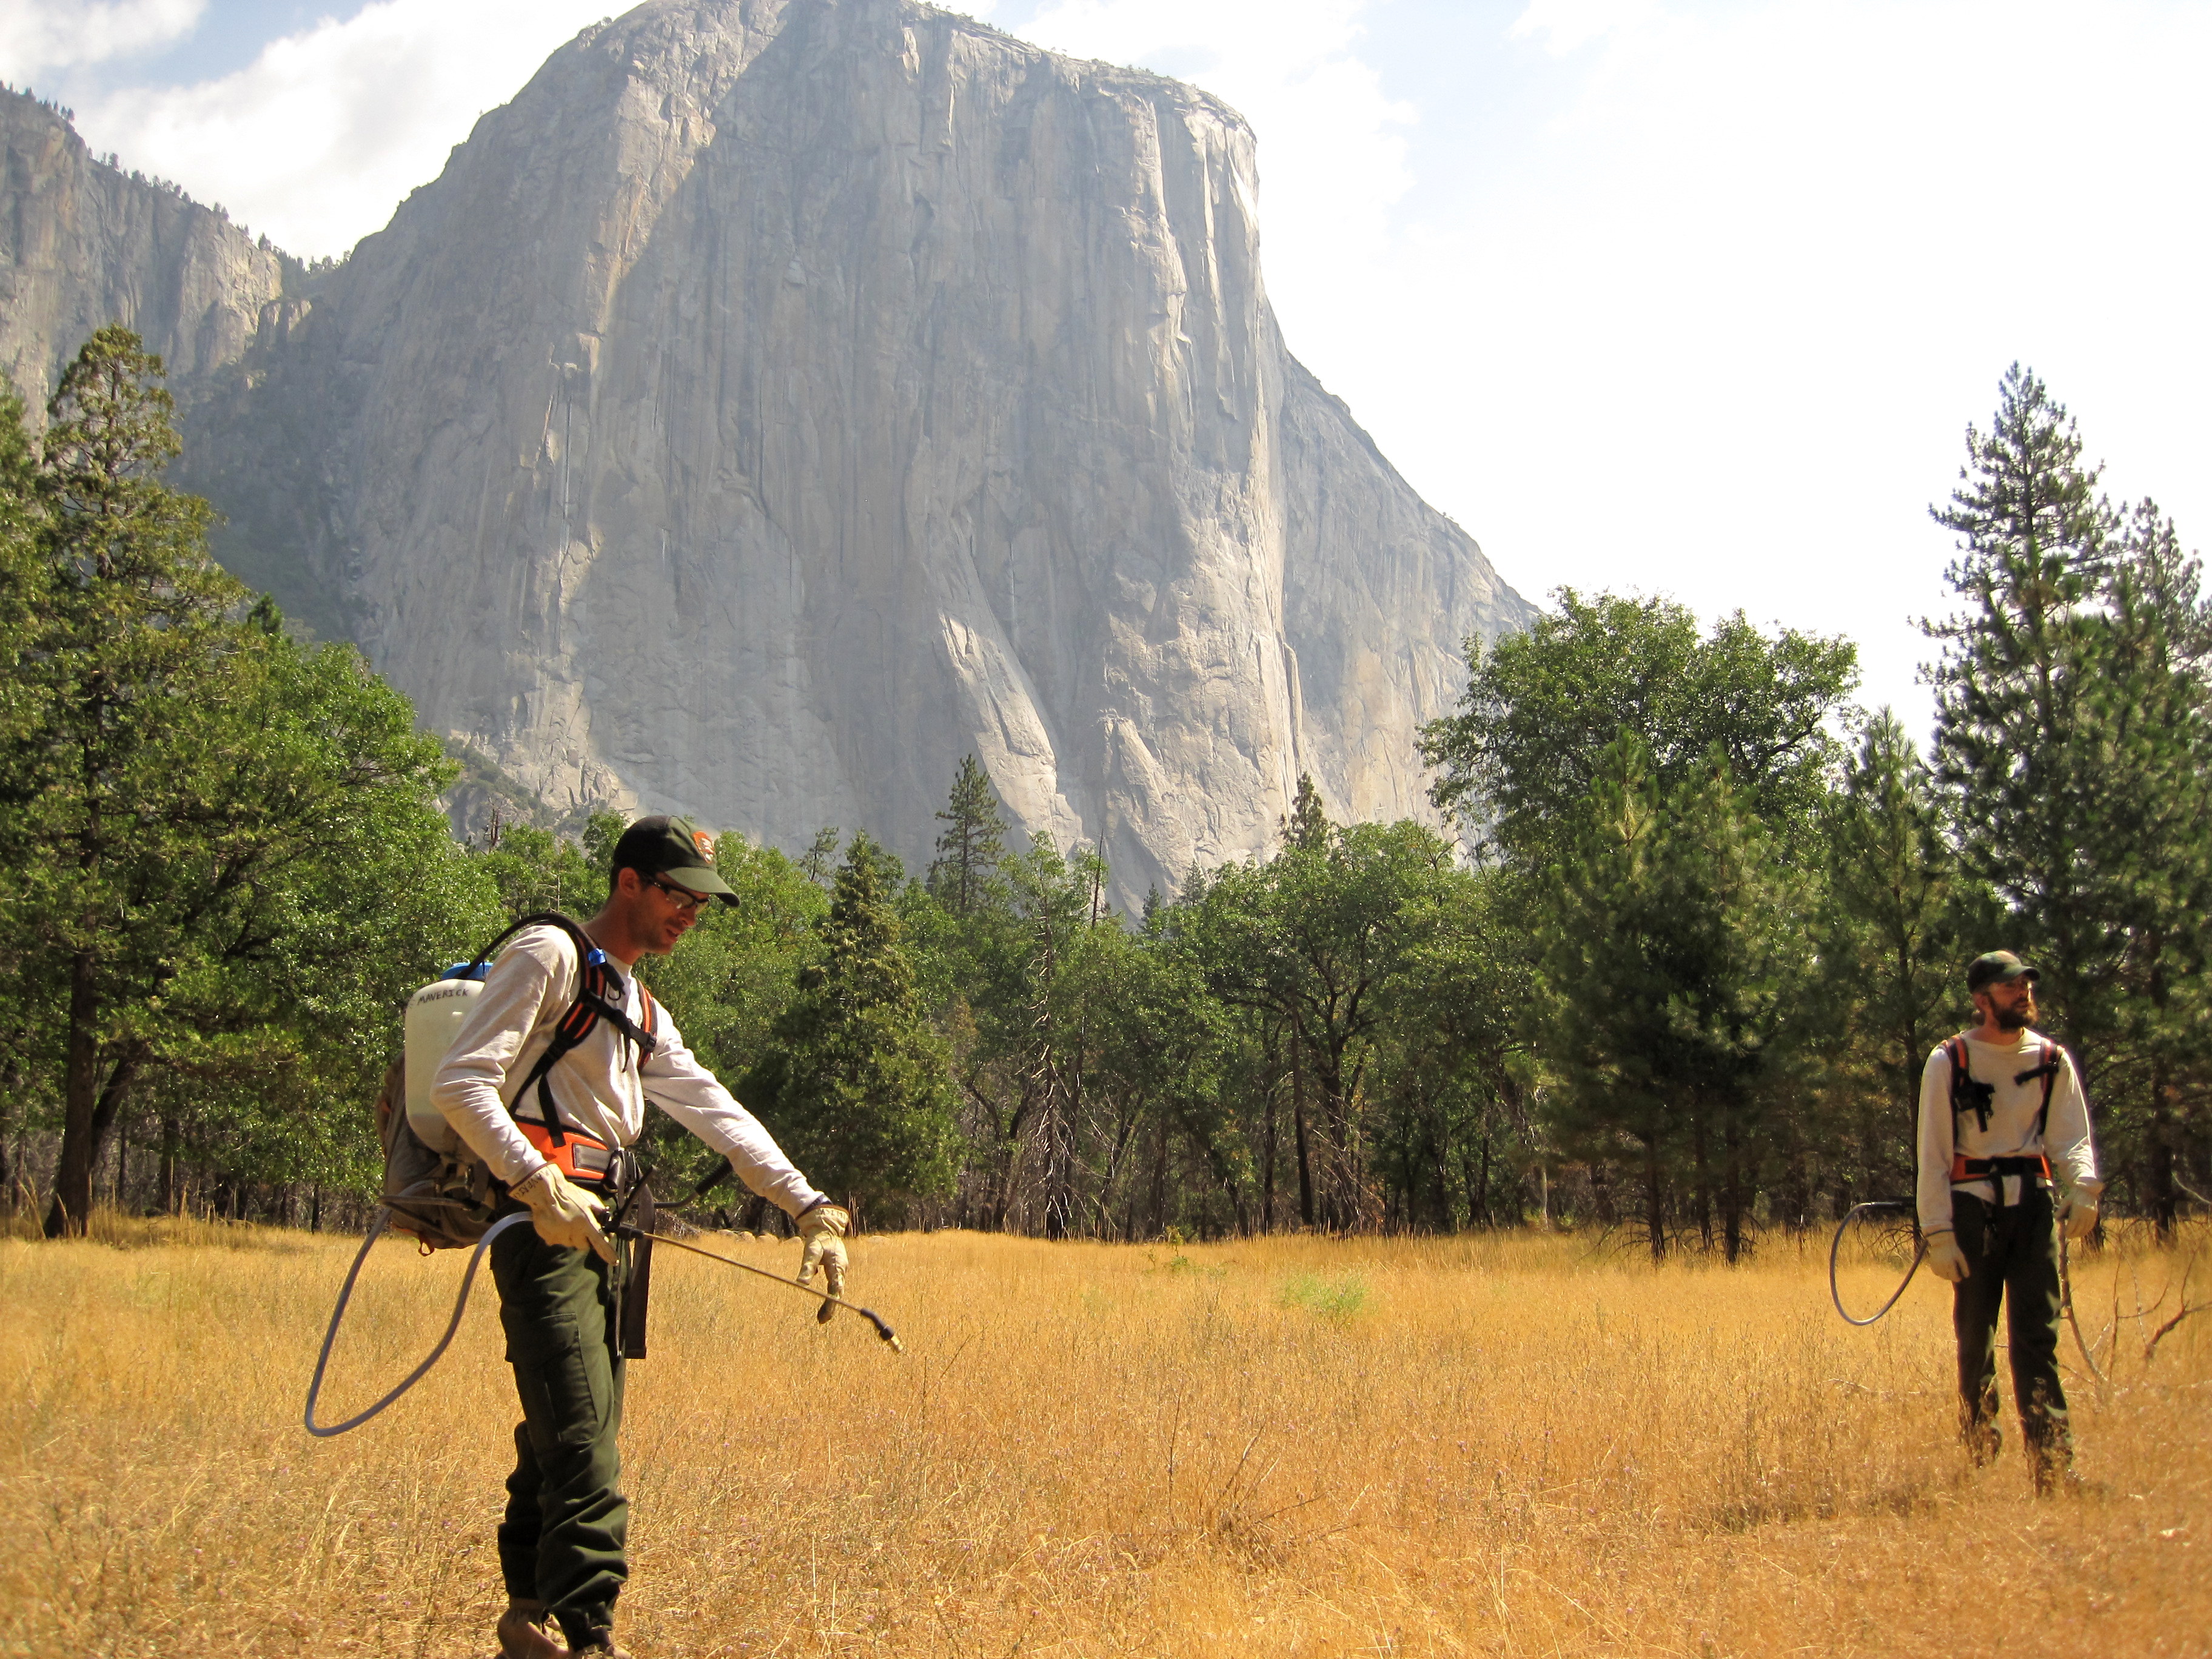 Yosemite invasive plant management staff treat Himalayan blackberry in Yosemite Valley below El Capitan, Yosemite National Park.